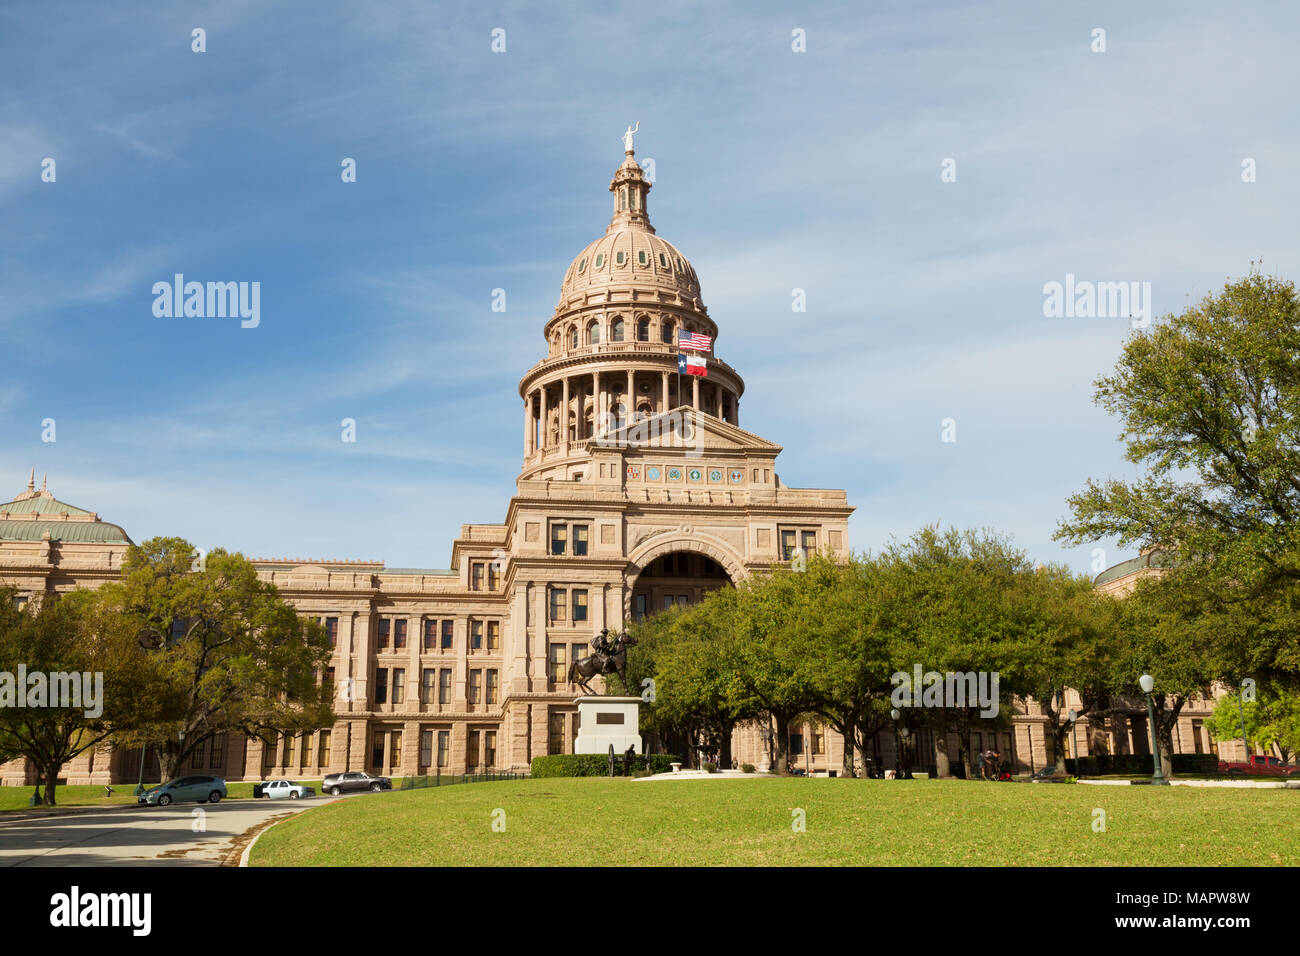 Austin Texas State Capitol building, Austin, Texas USA Banque D'Images